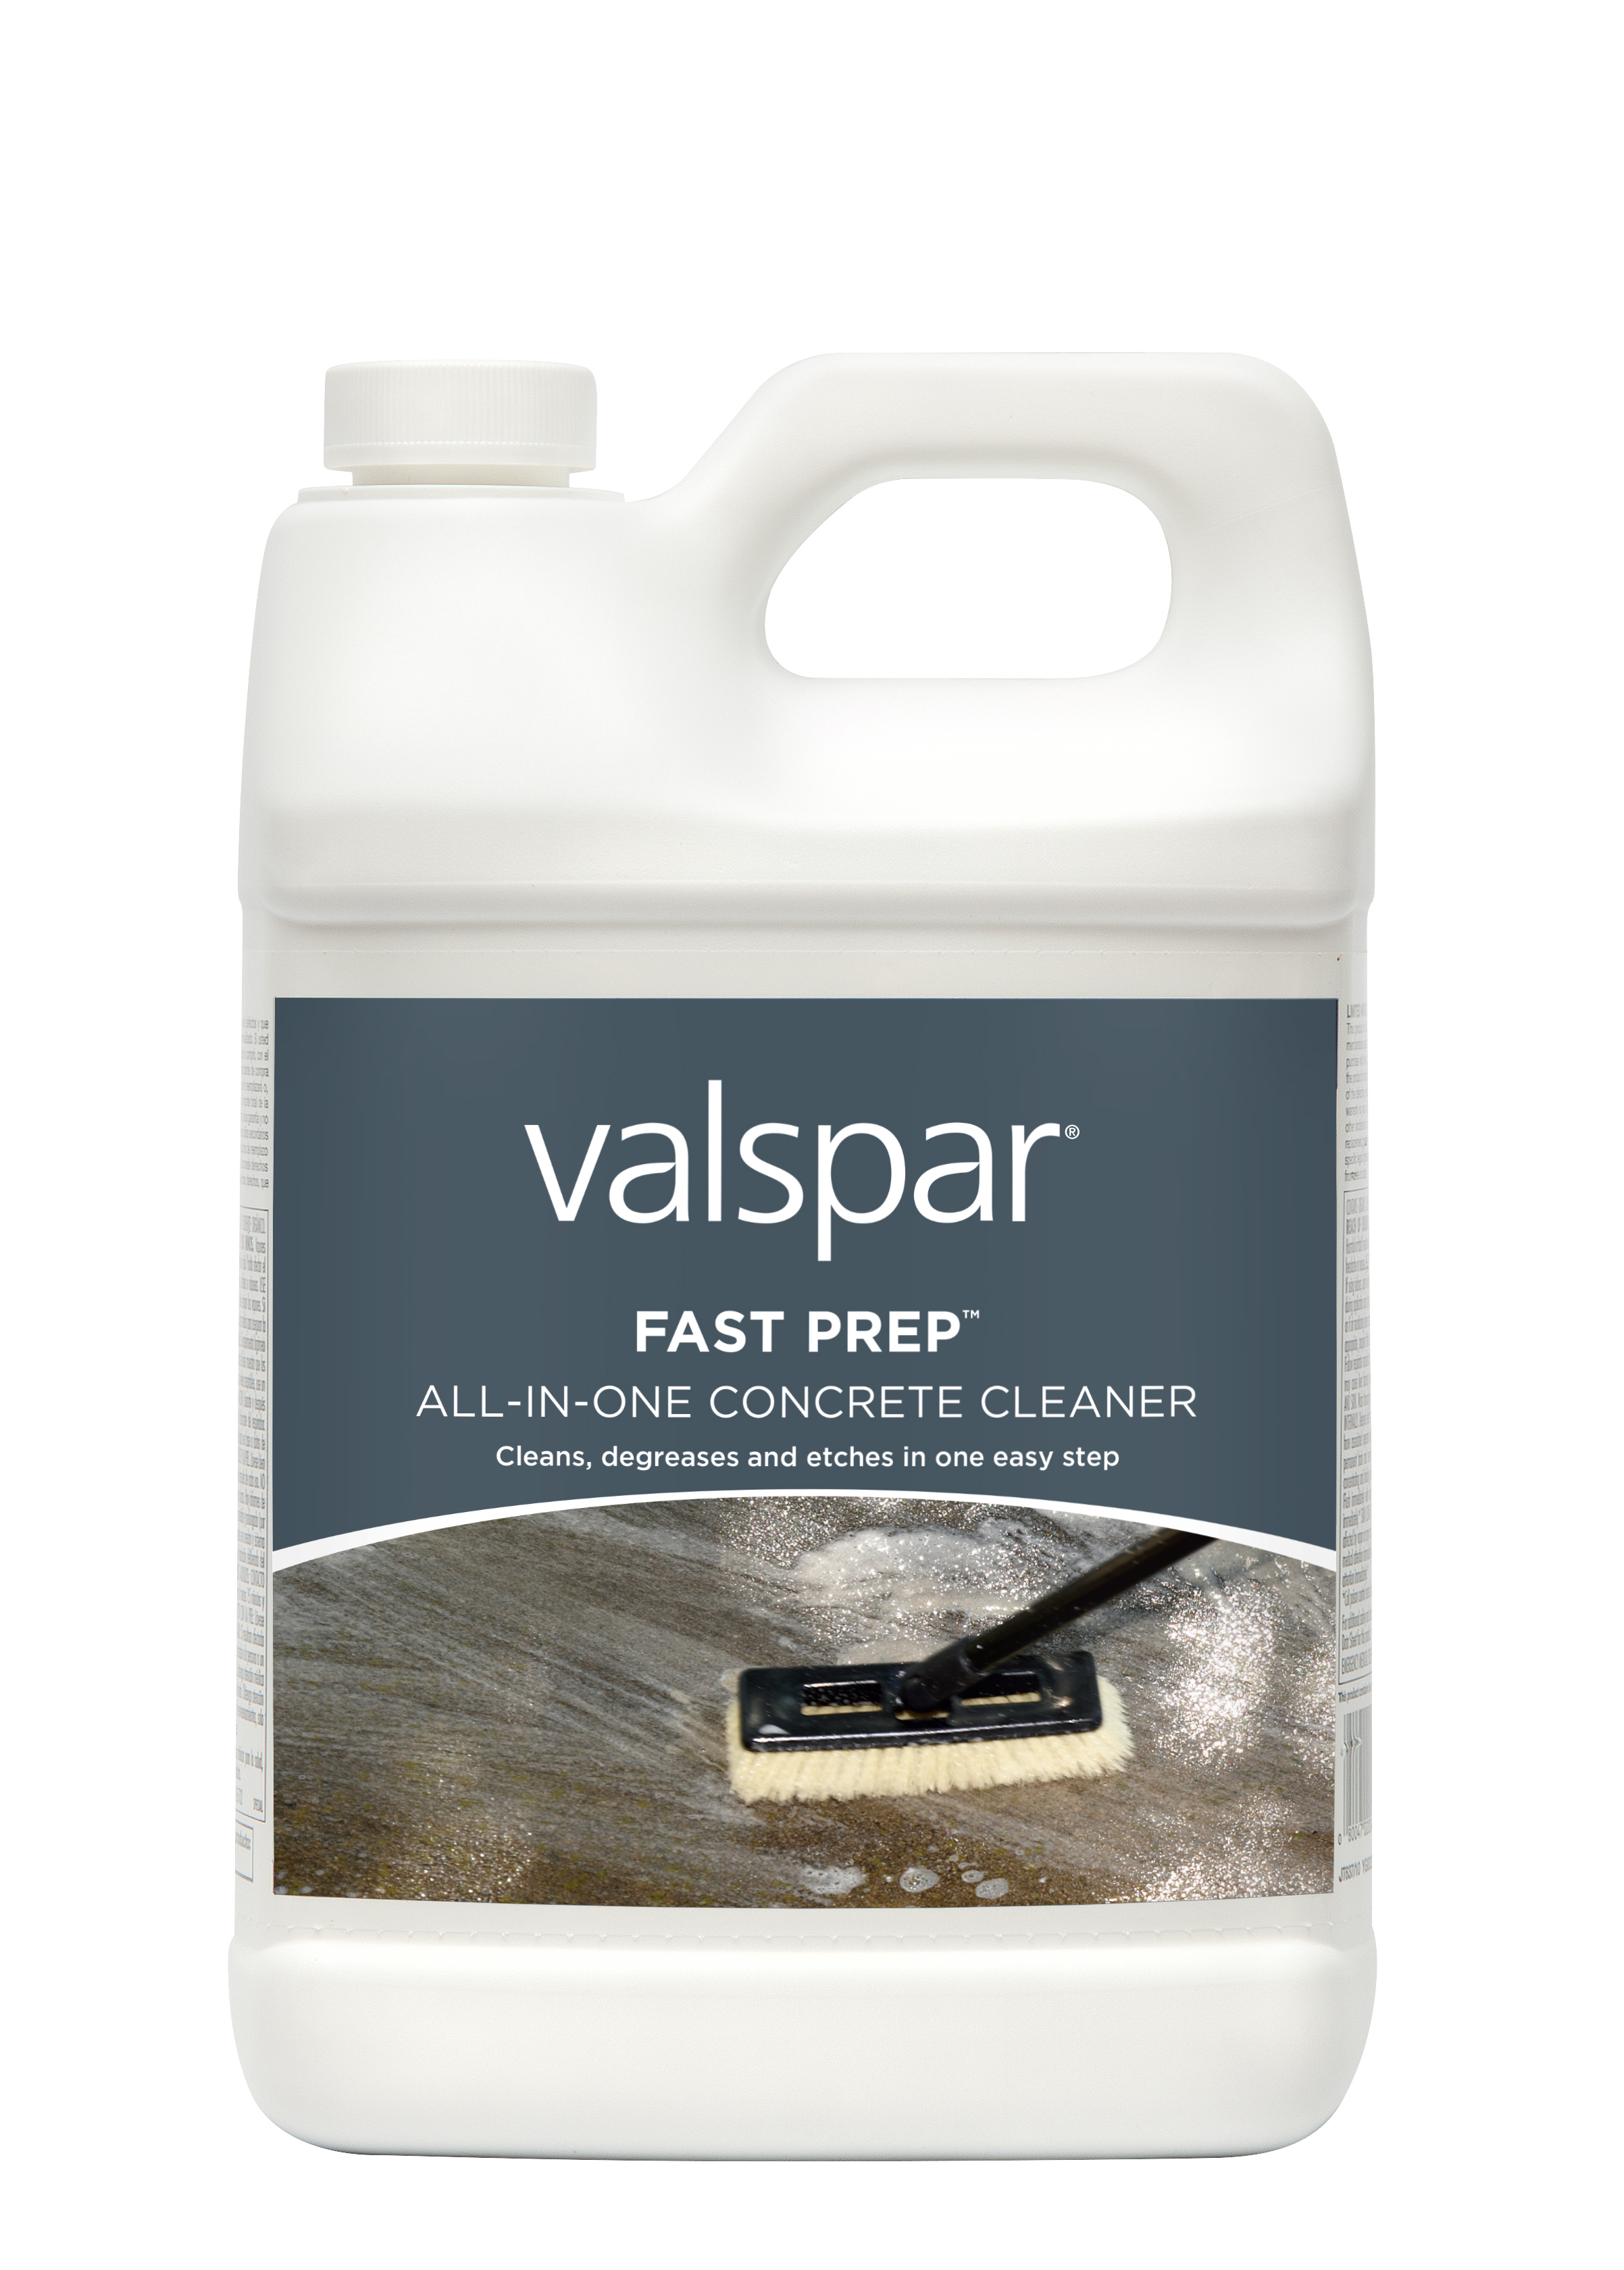 Valspar Fast Prep Concrete Cleaner